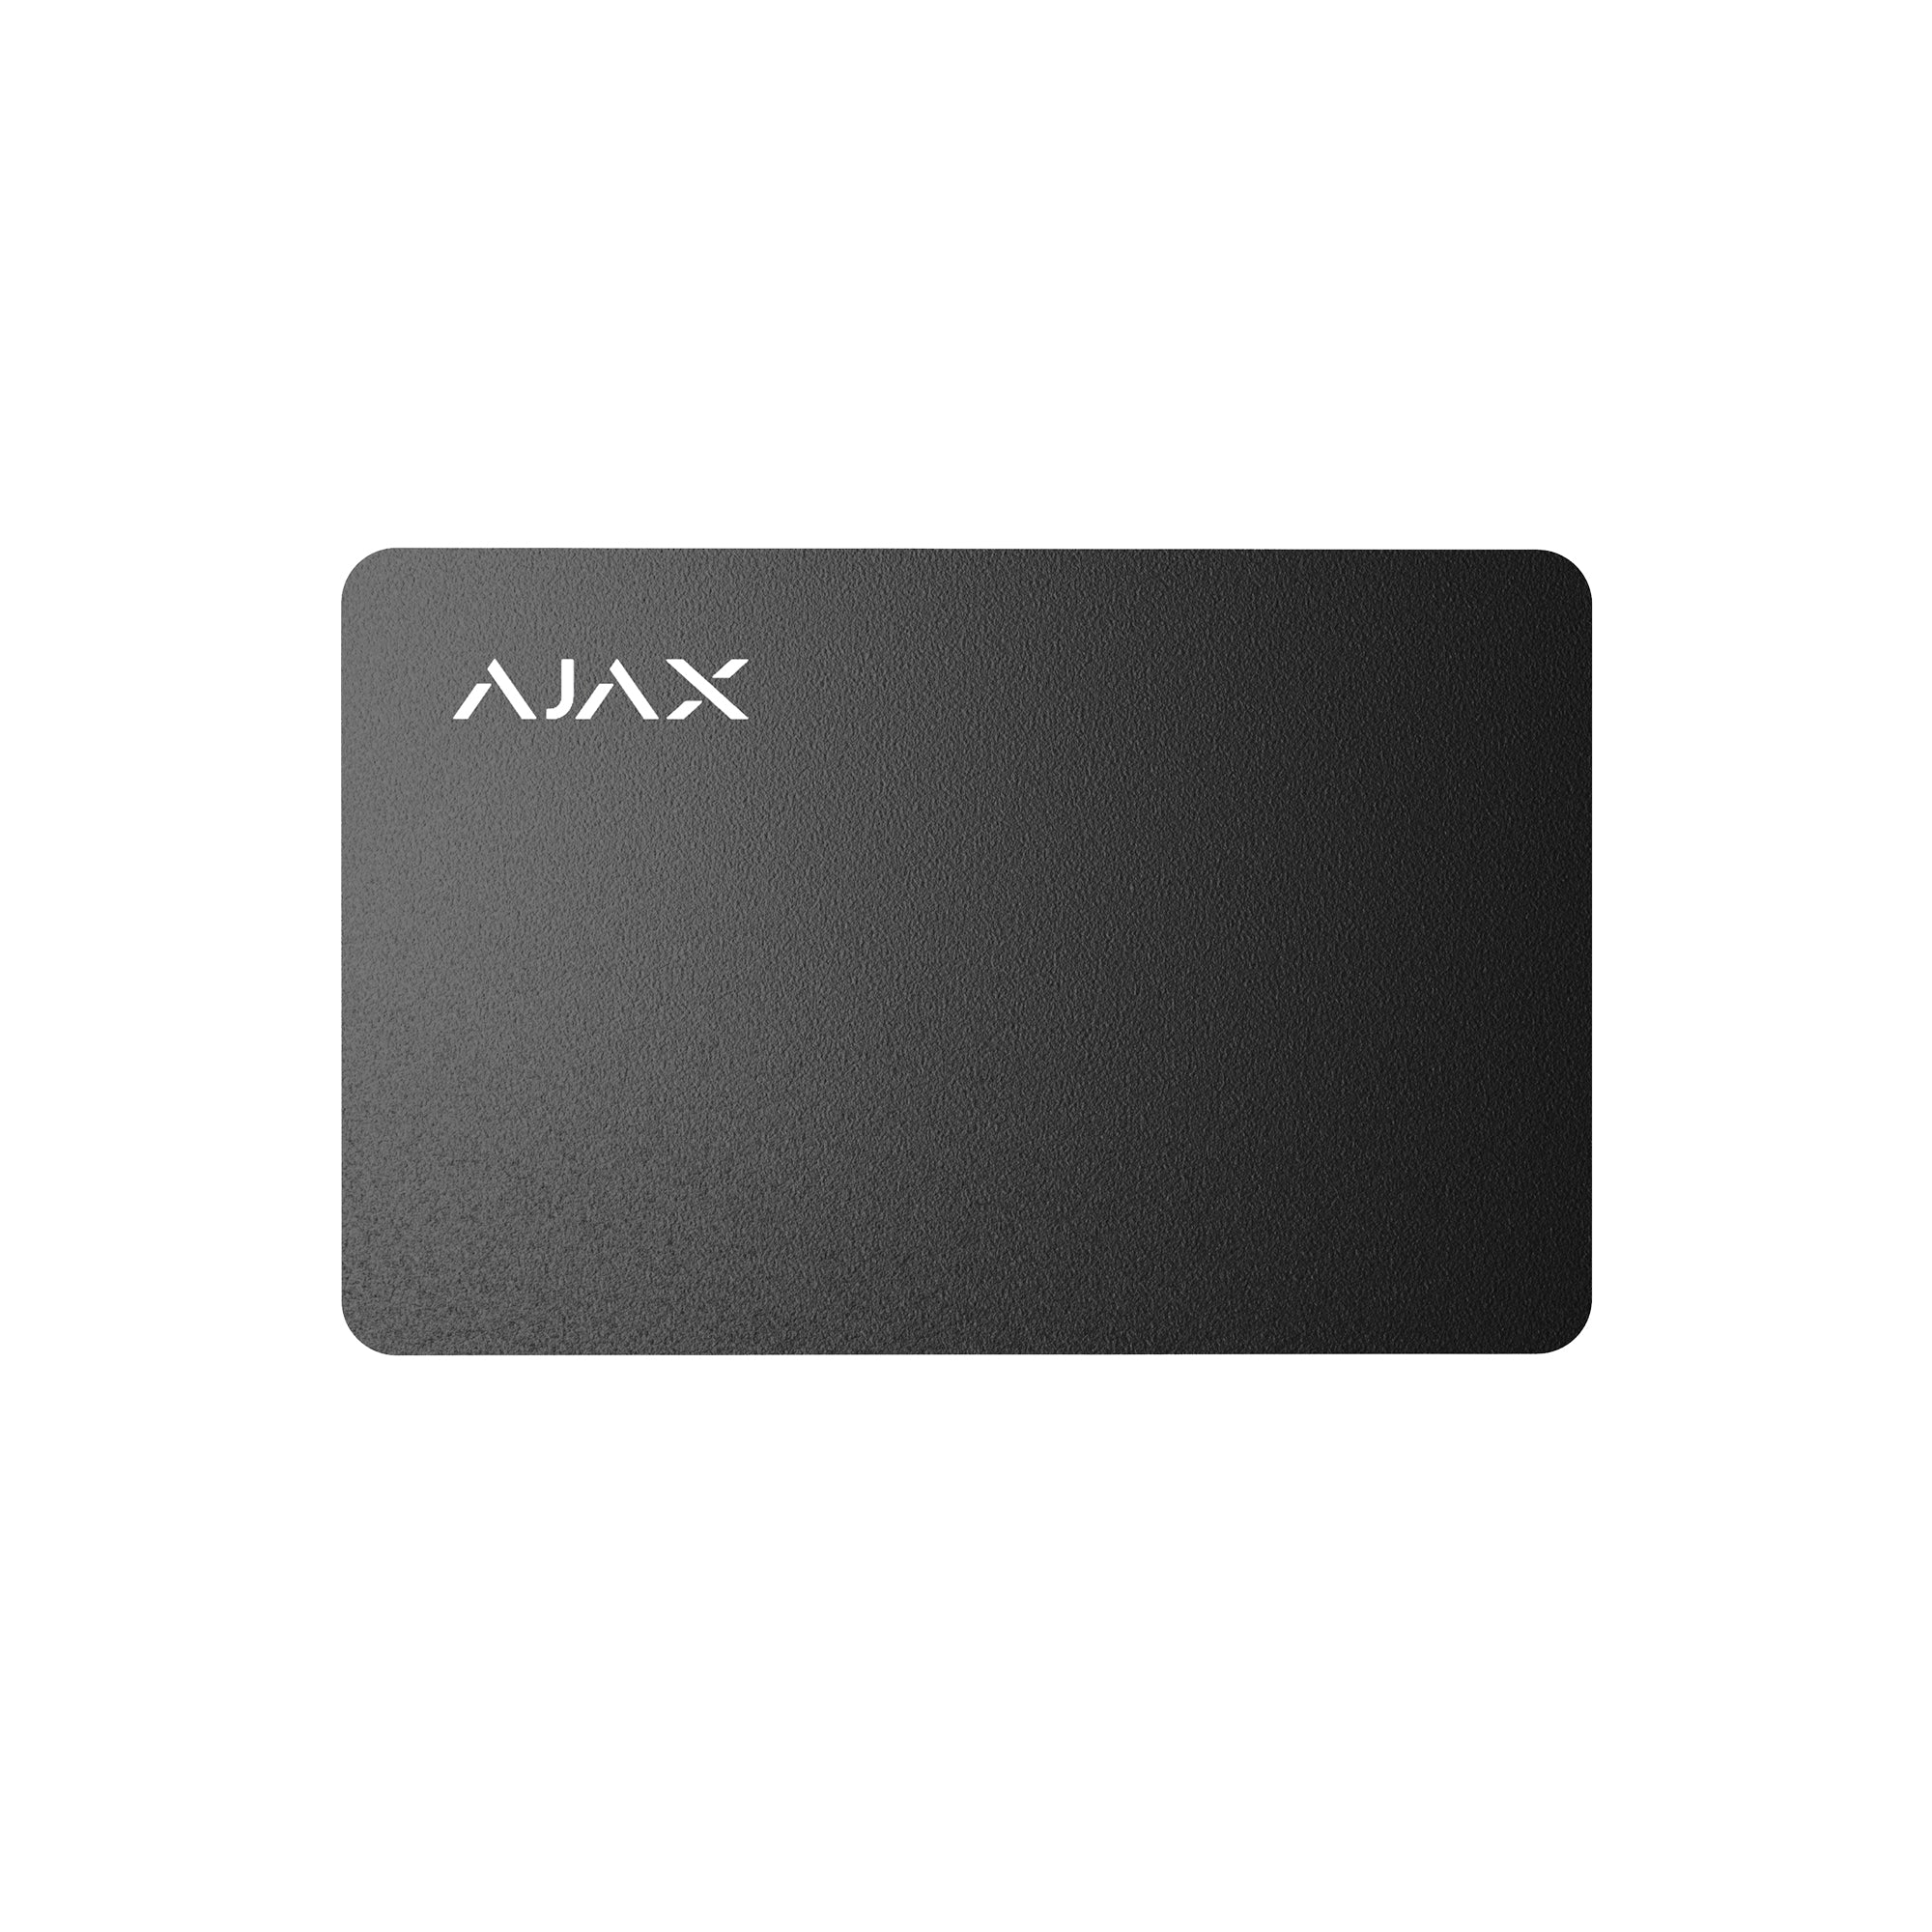 Ajax Pass Tarjeta protegida sin contacto para teclado